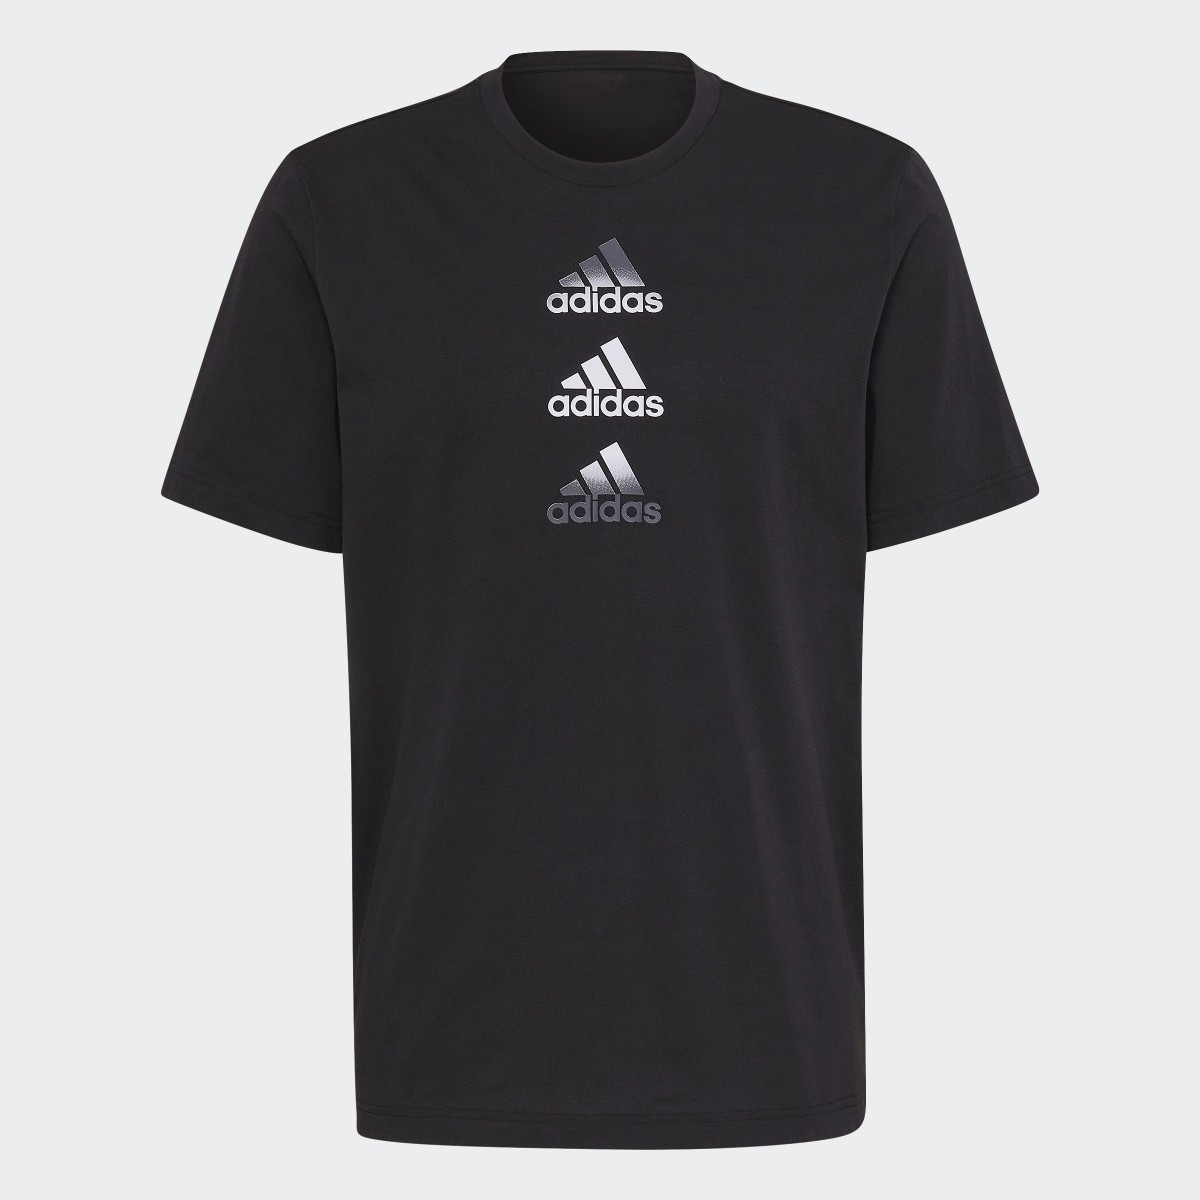 Adidas T-shirt Designed to Move. 5